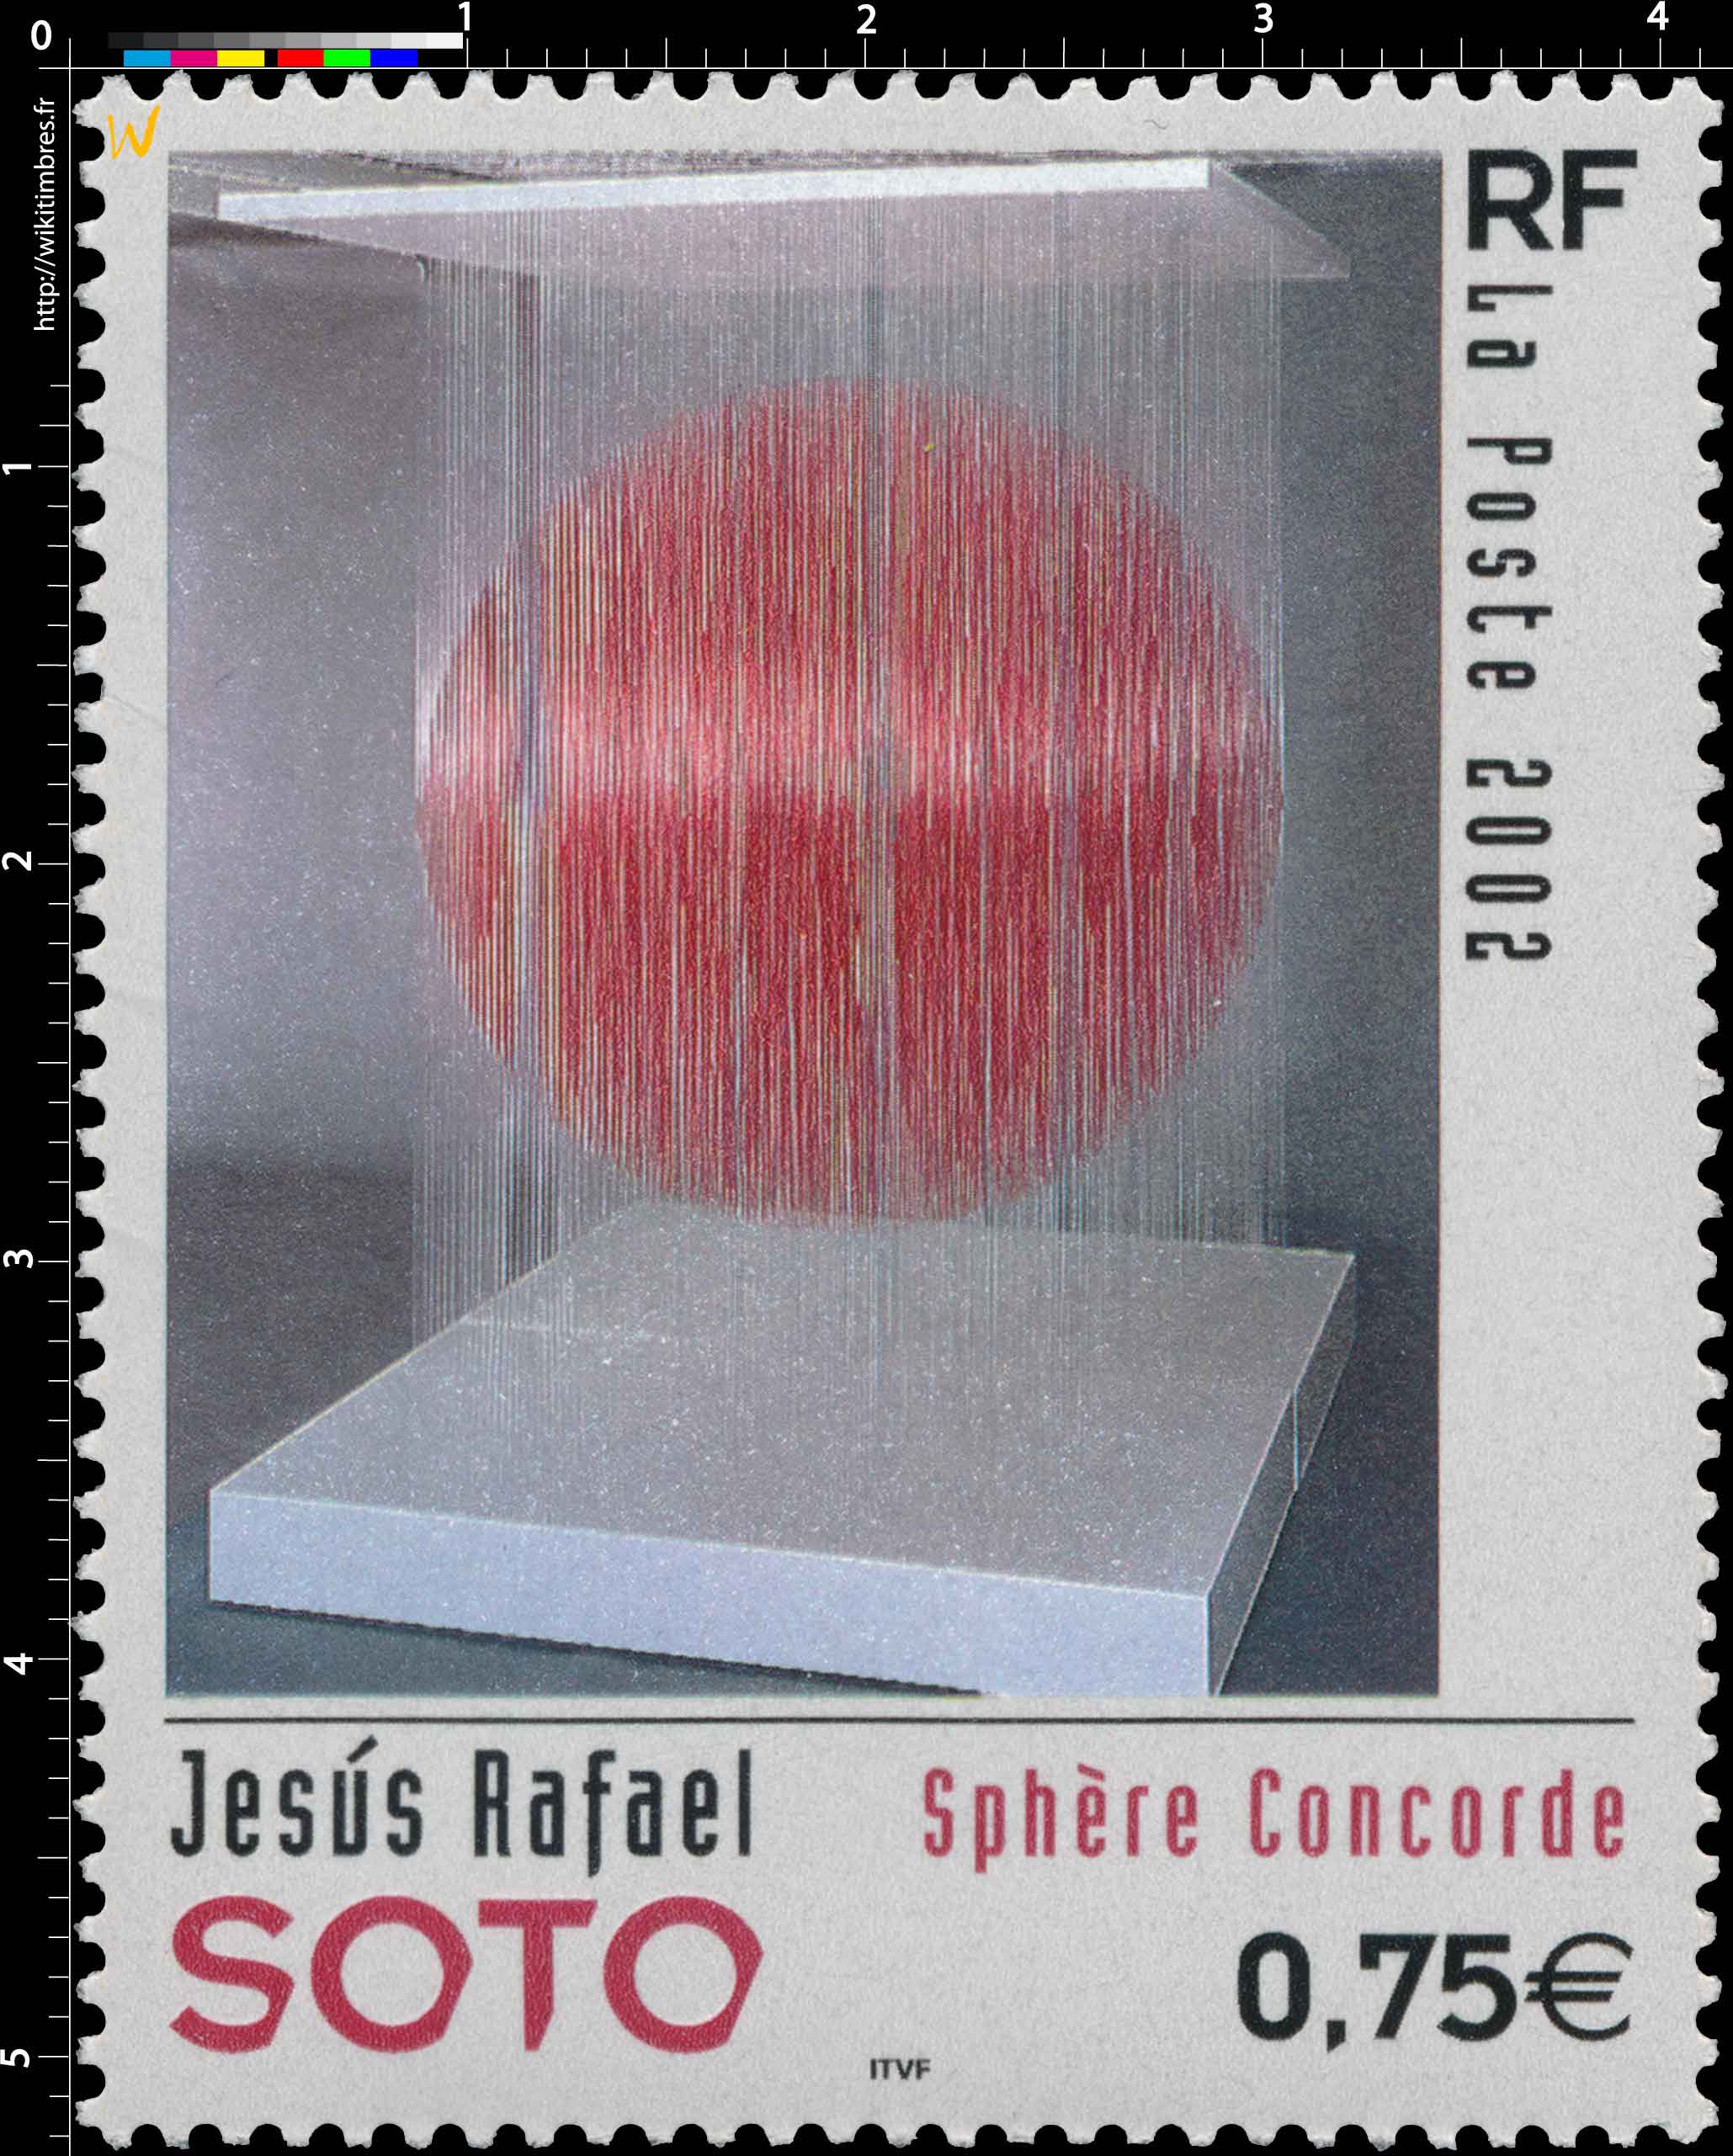 2002 Jesús Rafael SOTO Sphère Concorde